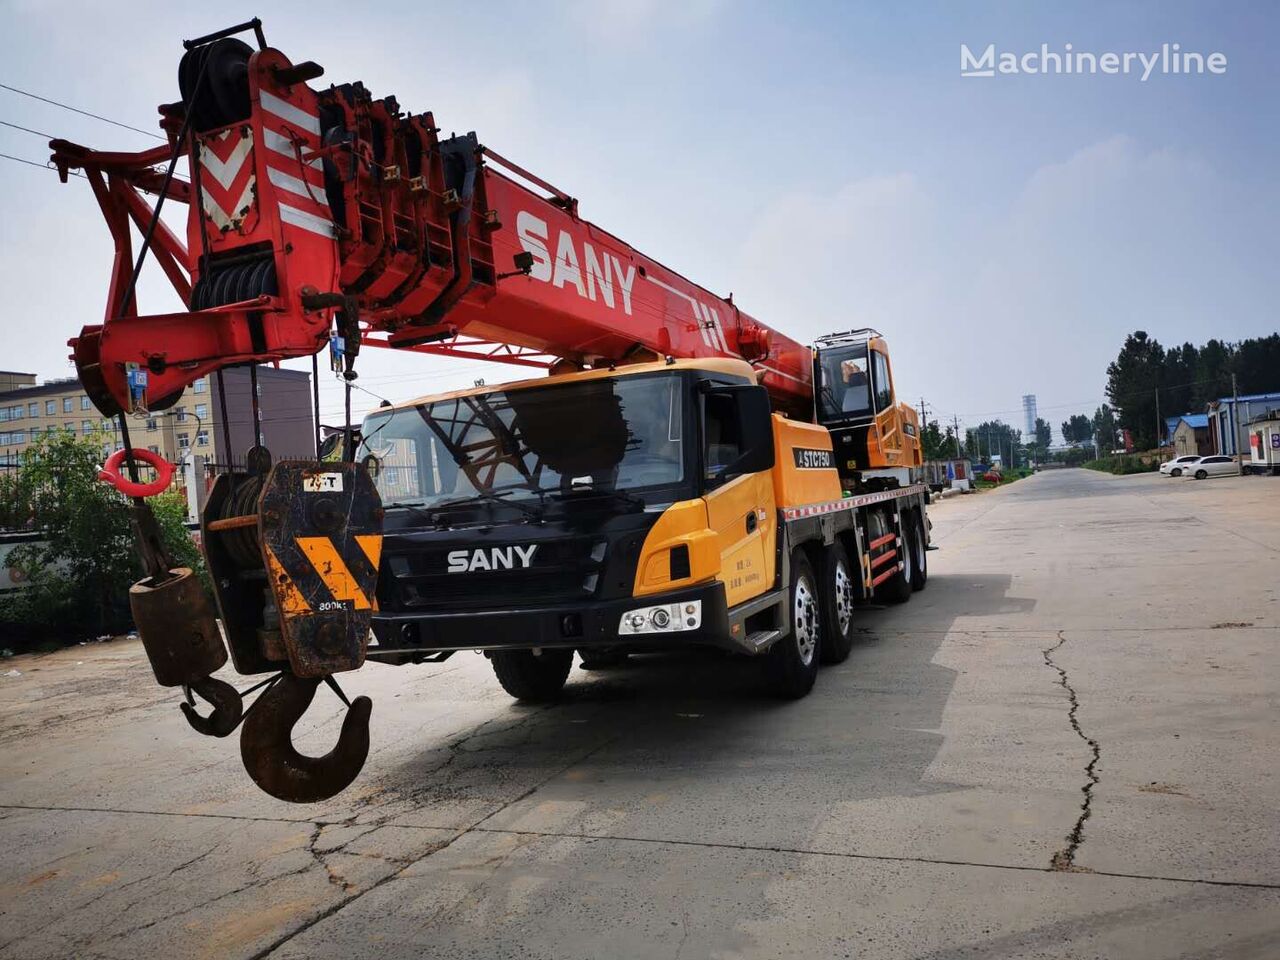 Sany STC750 used crane sany mobile crane